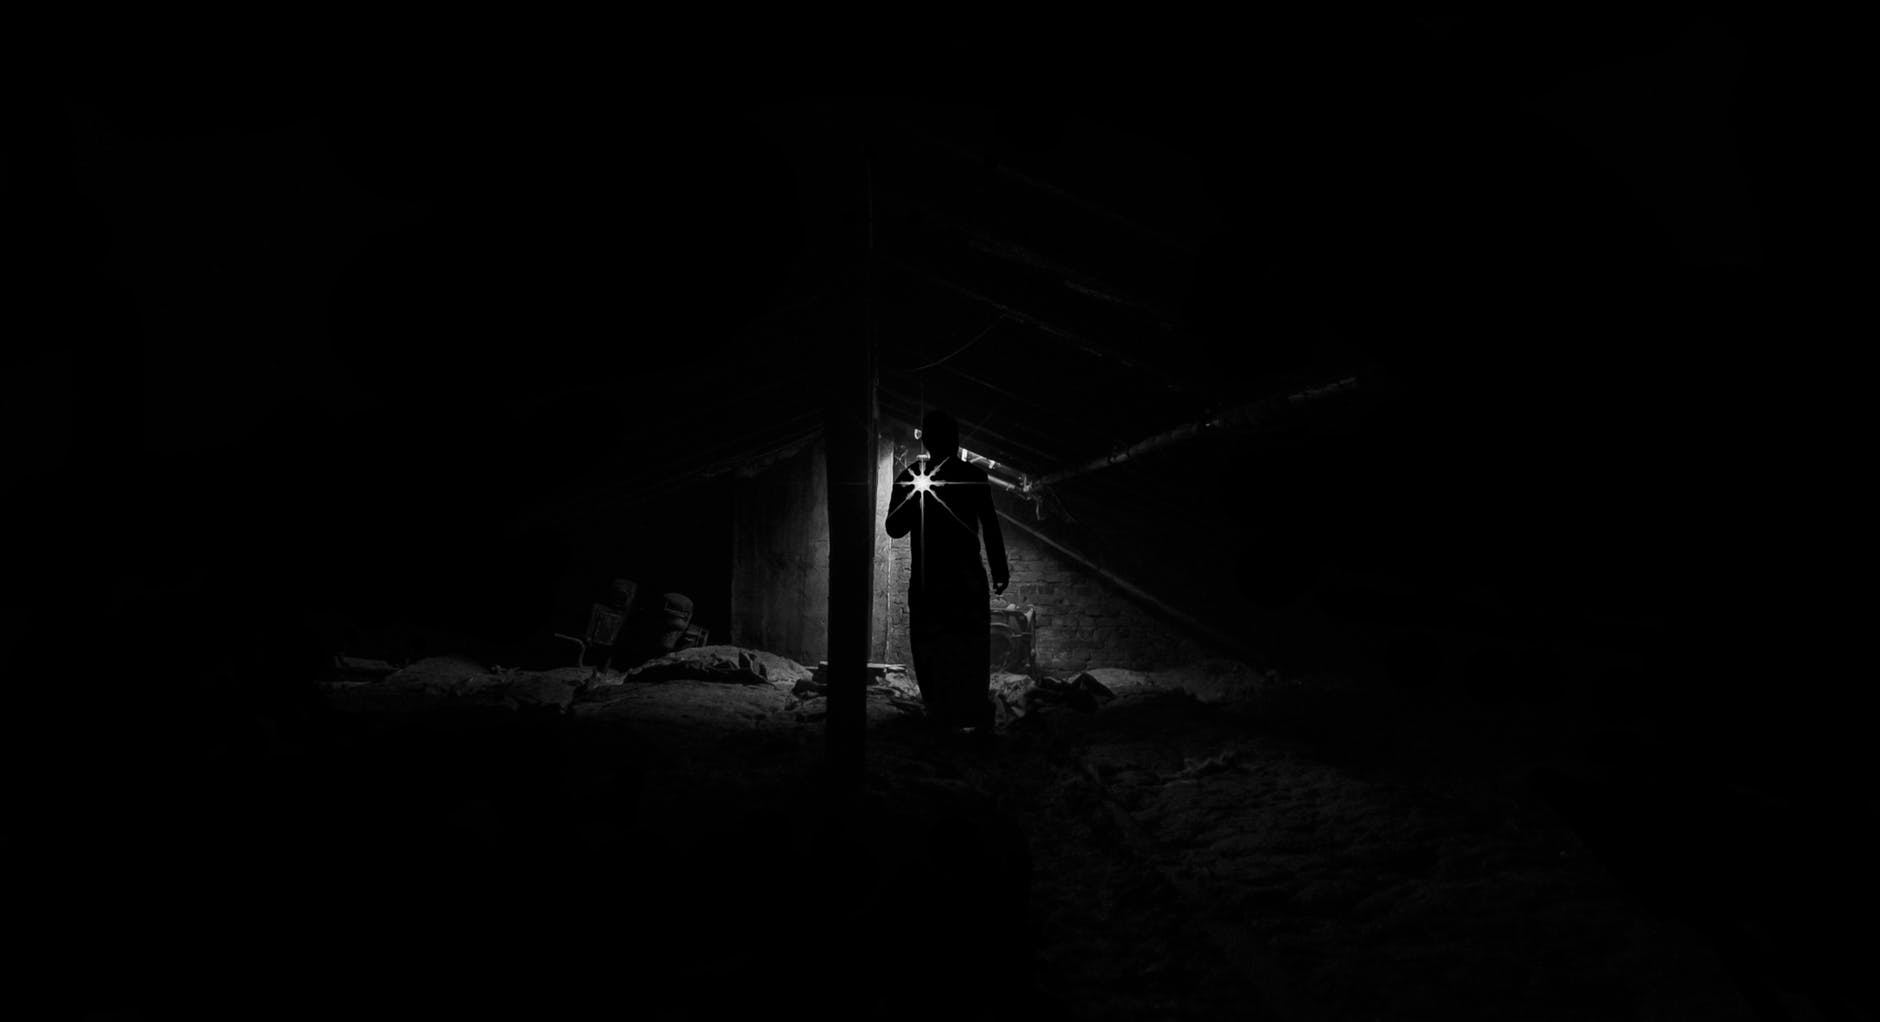 shadowy figure with flashlight